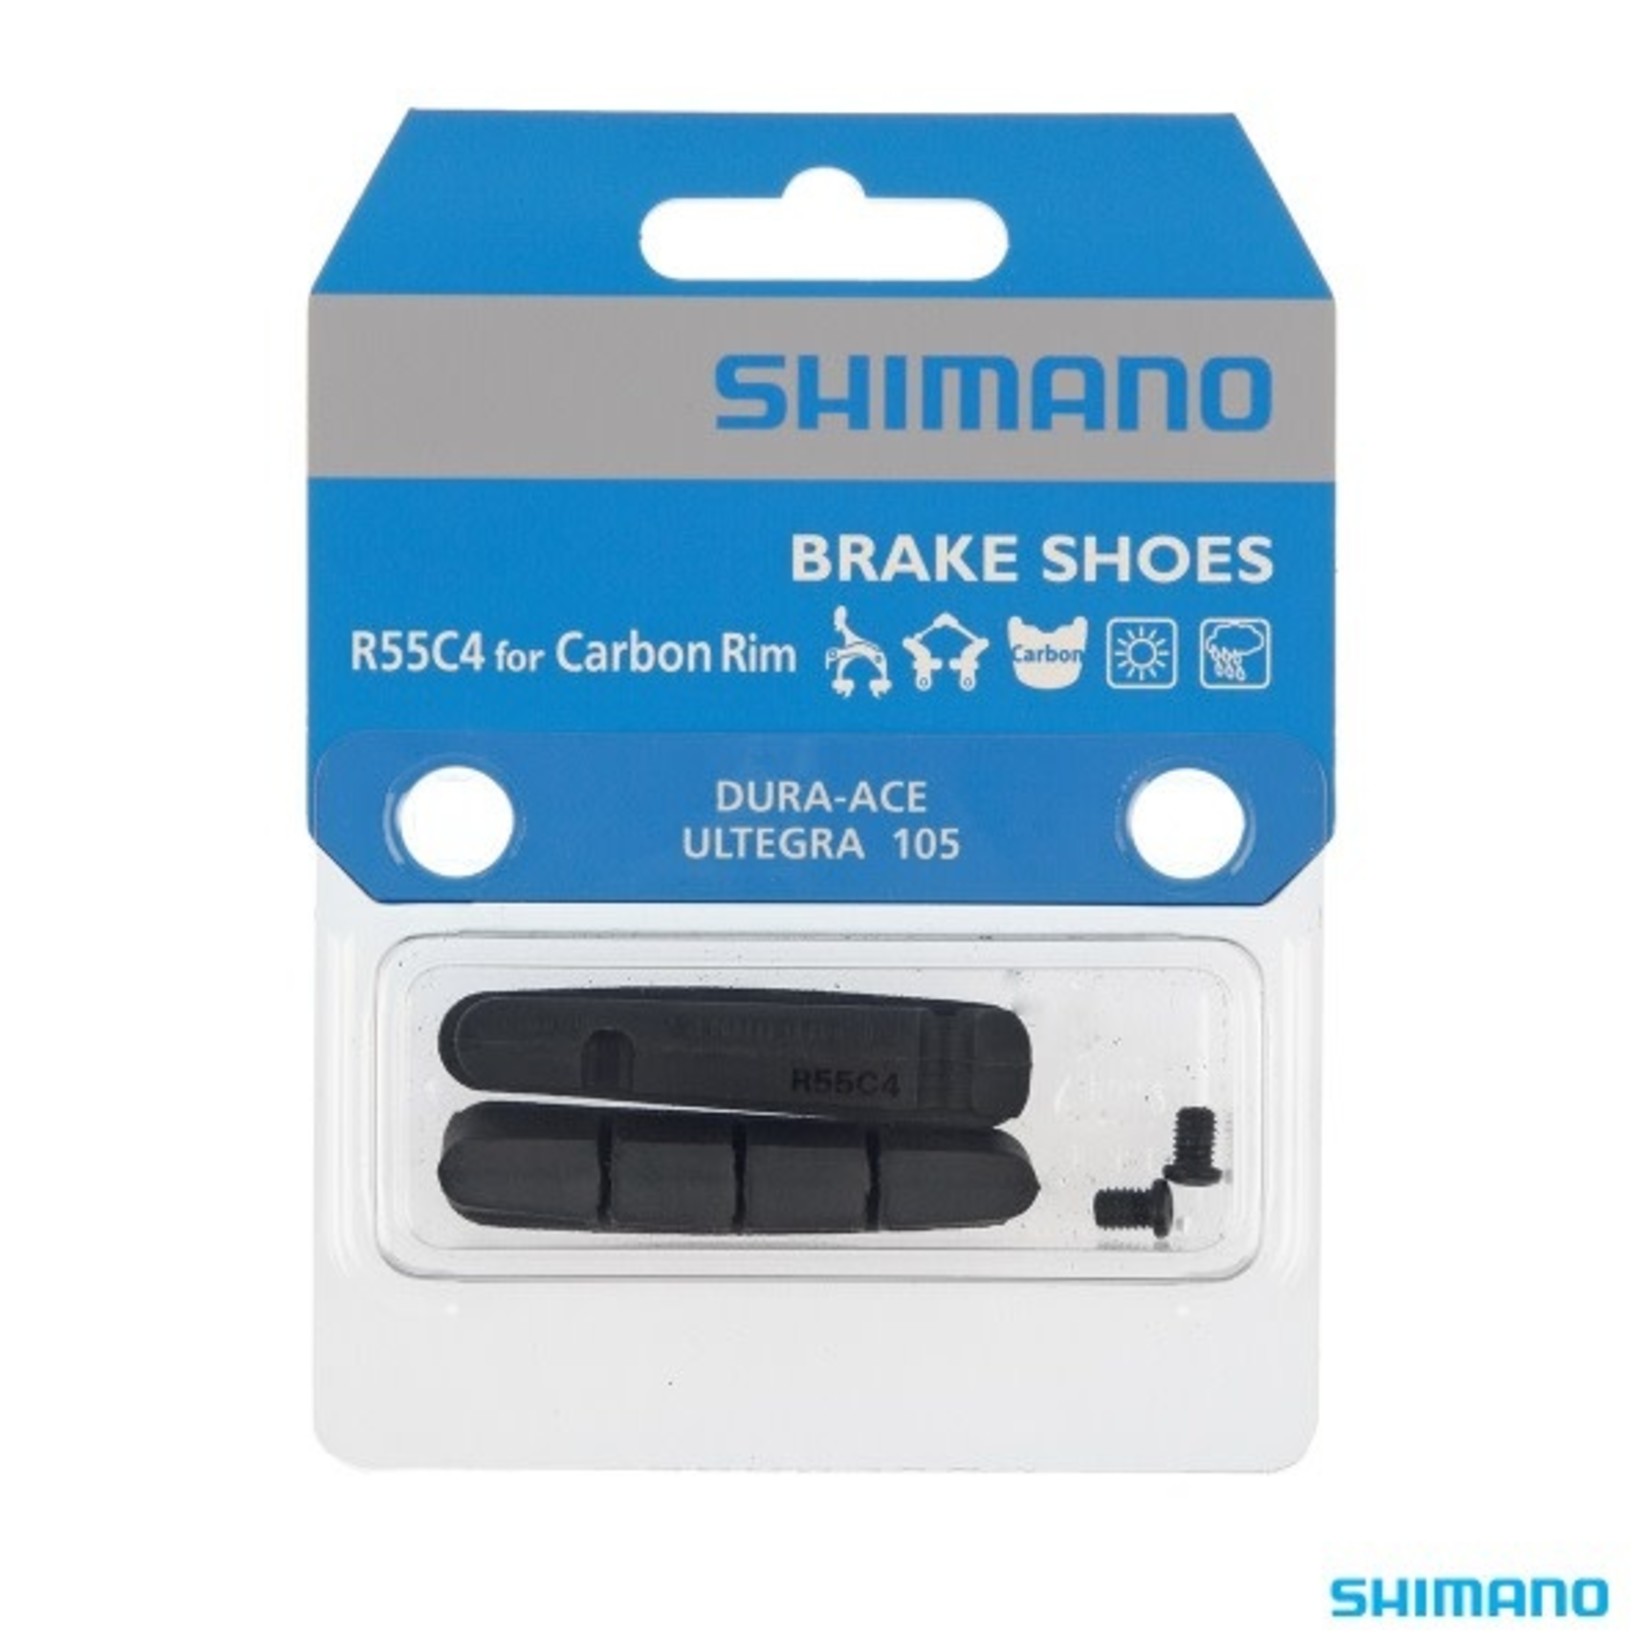 SHIMANO SHIMANO BR-9000 BRAKE PAD INSERTS R55C4 for CARBON RIM 1 PAIR